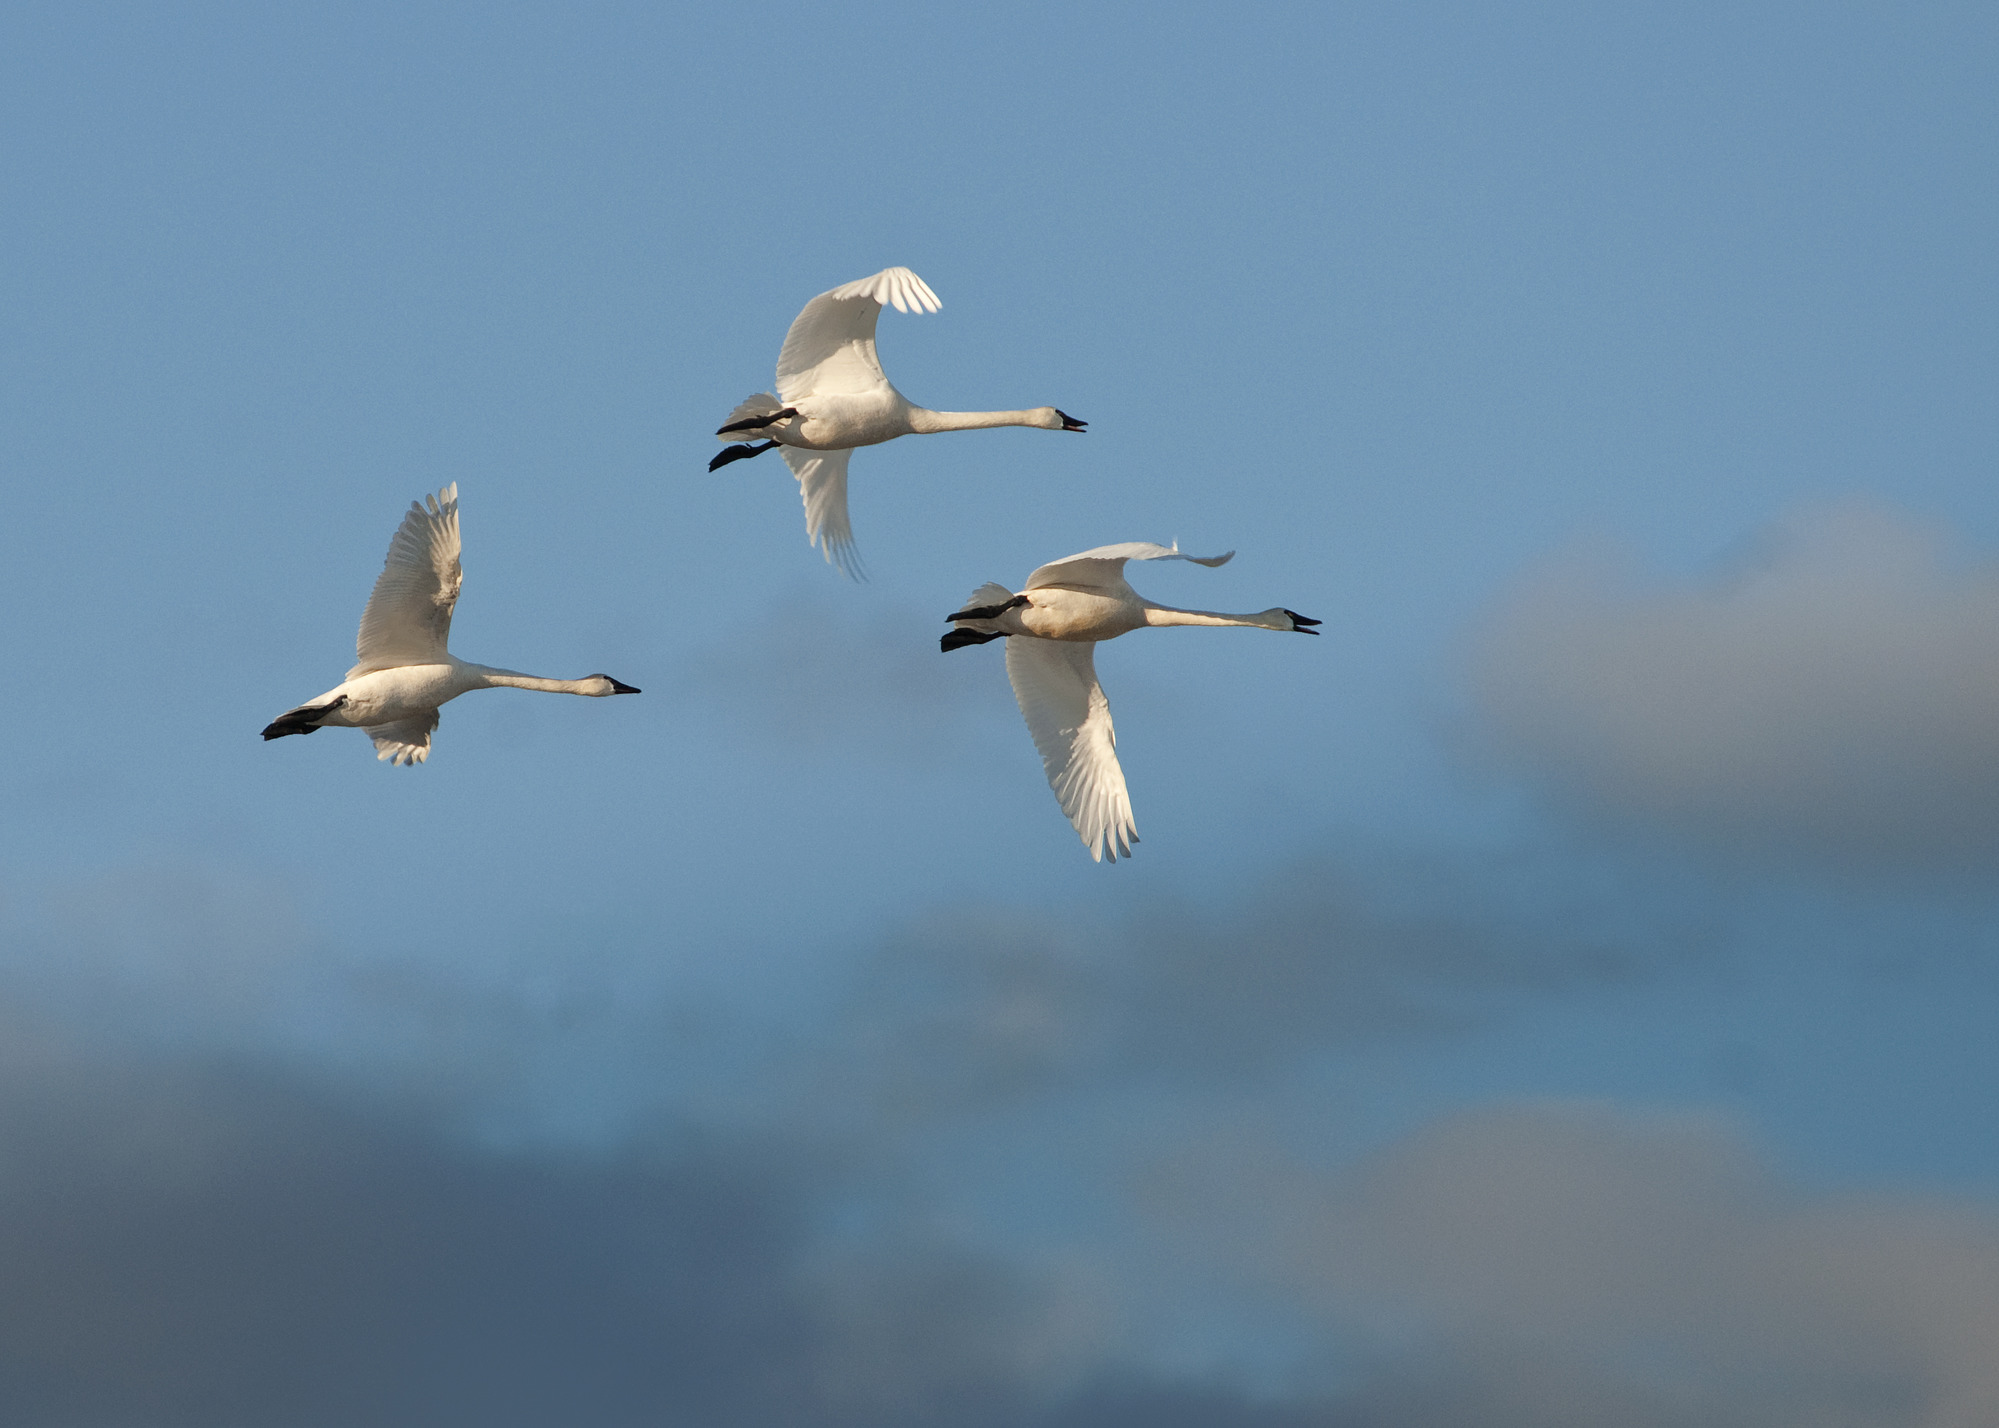 Three tundra swans in flight